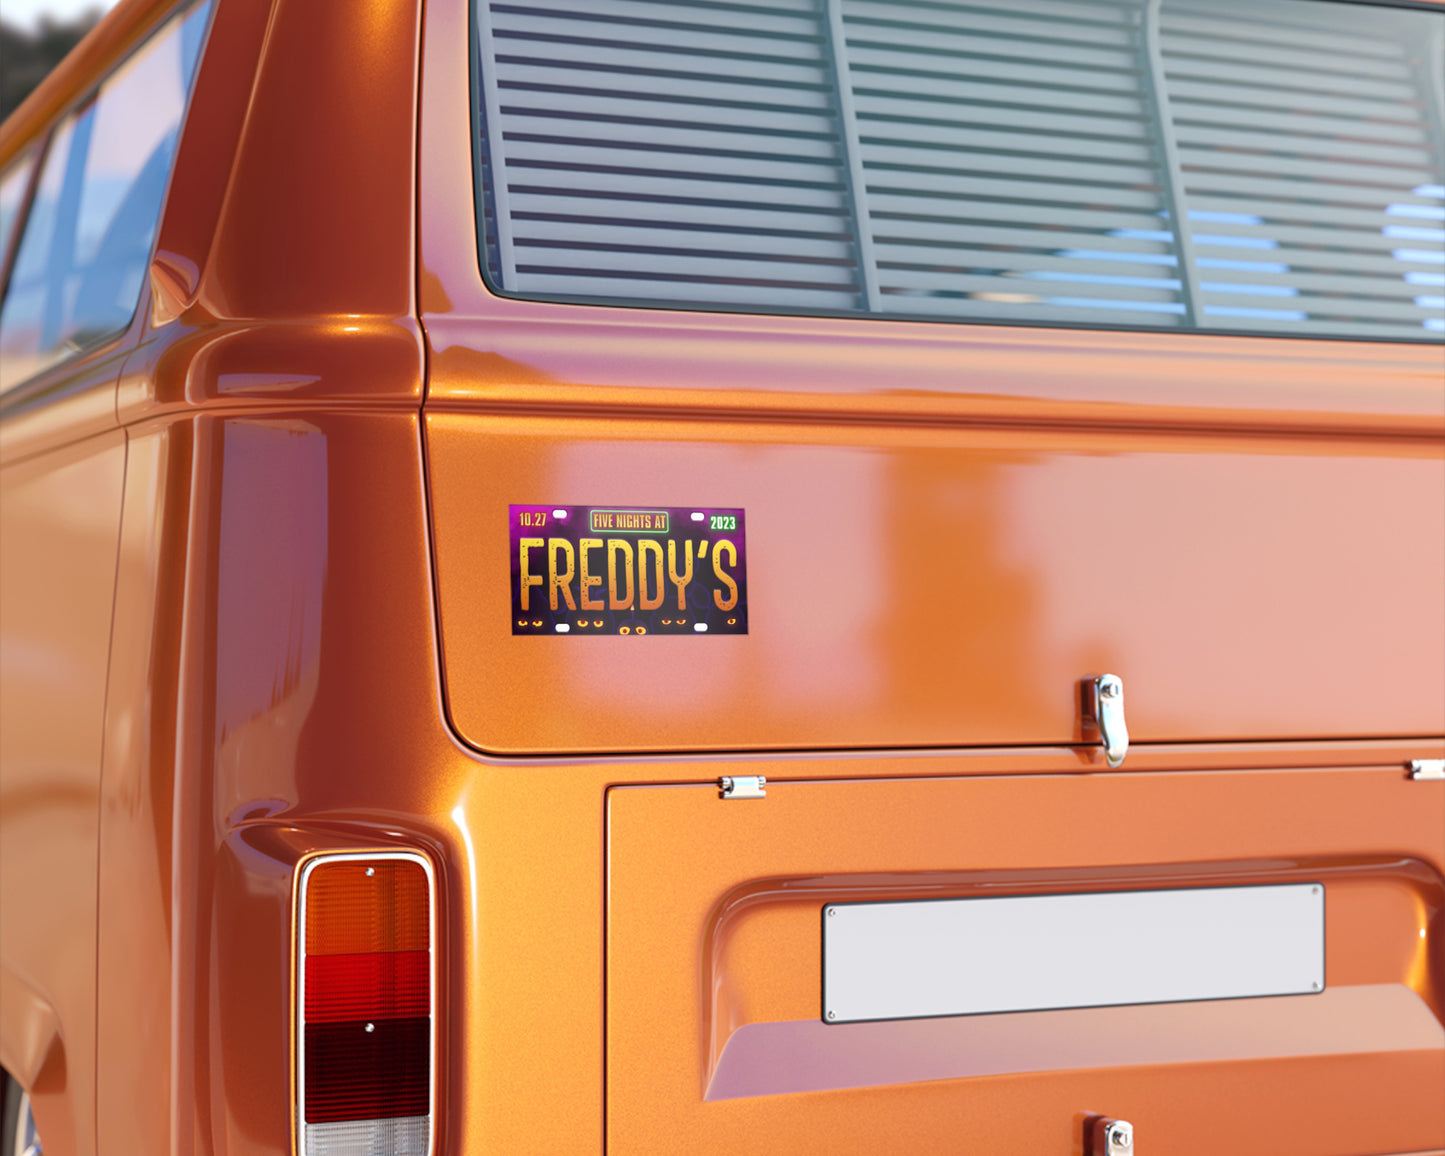 Freddy's (2023) movie bumper sticker